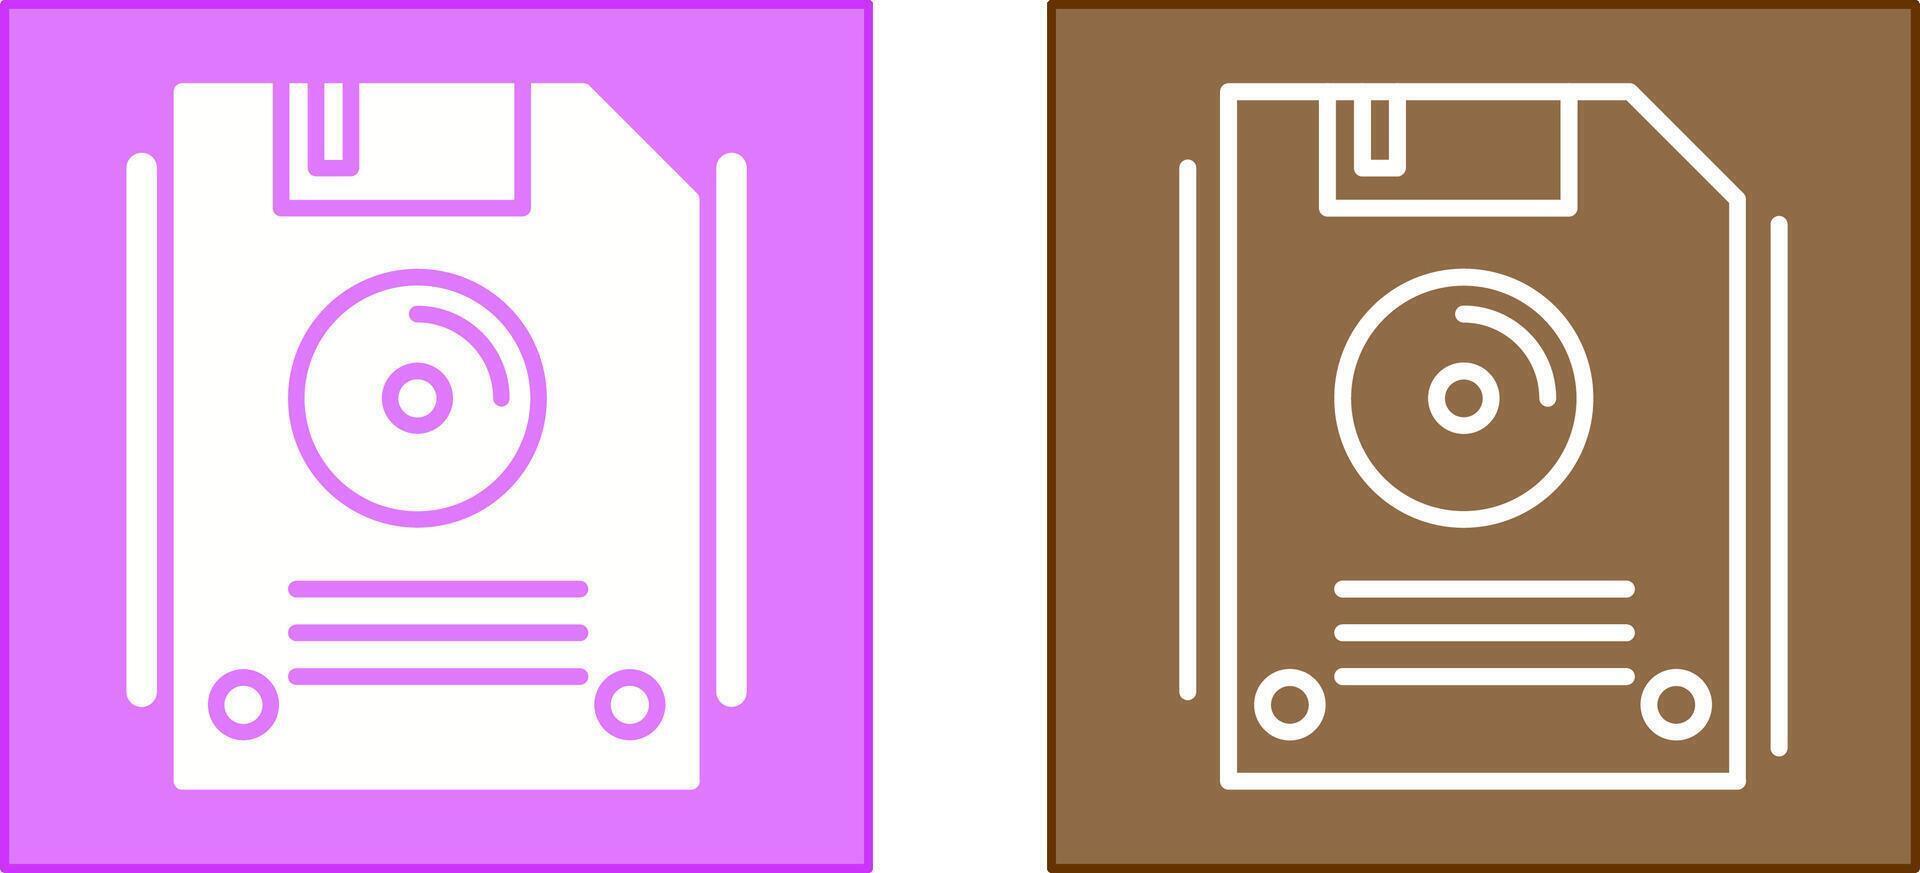 Floppy Disk Icon vector